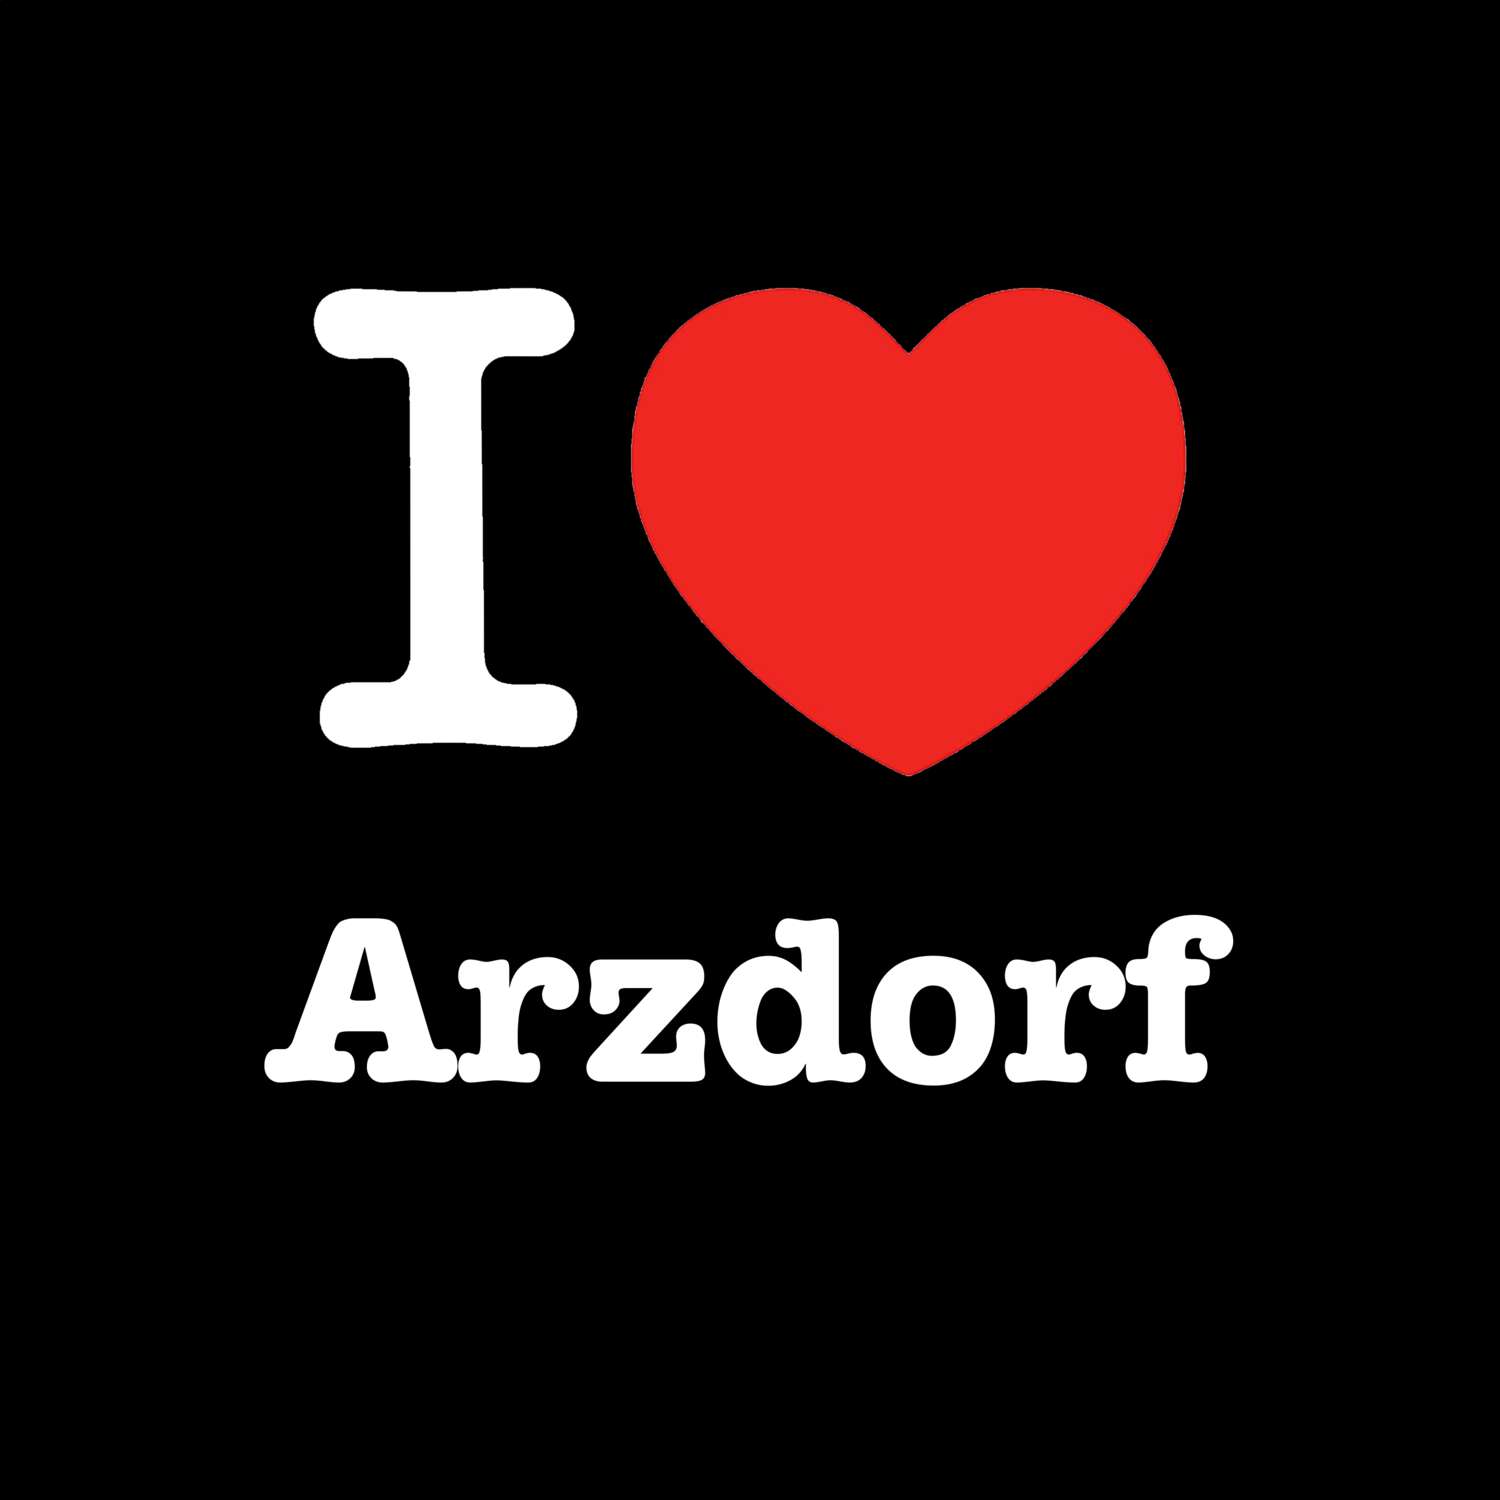 Arzdorf T-Shirt »I love«